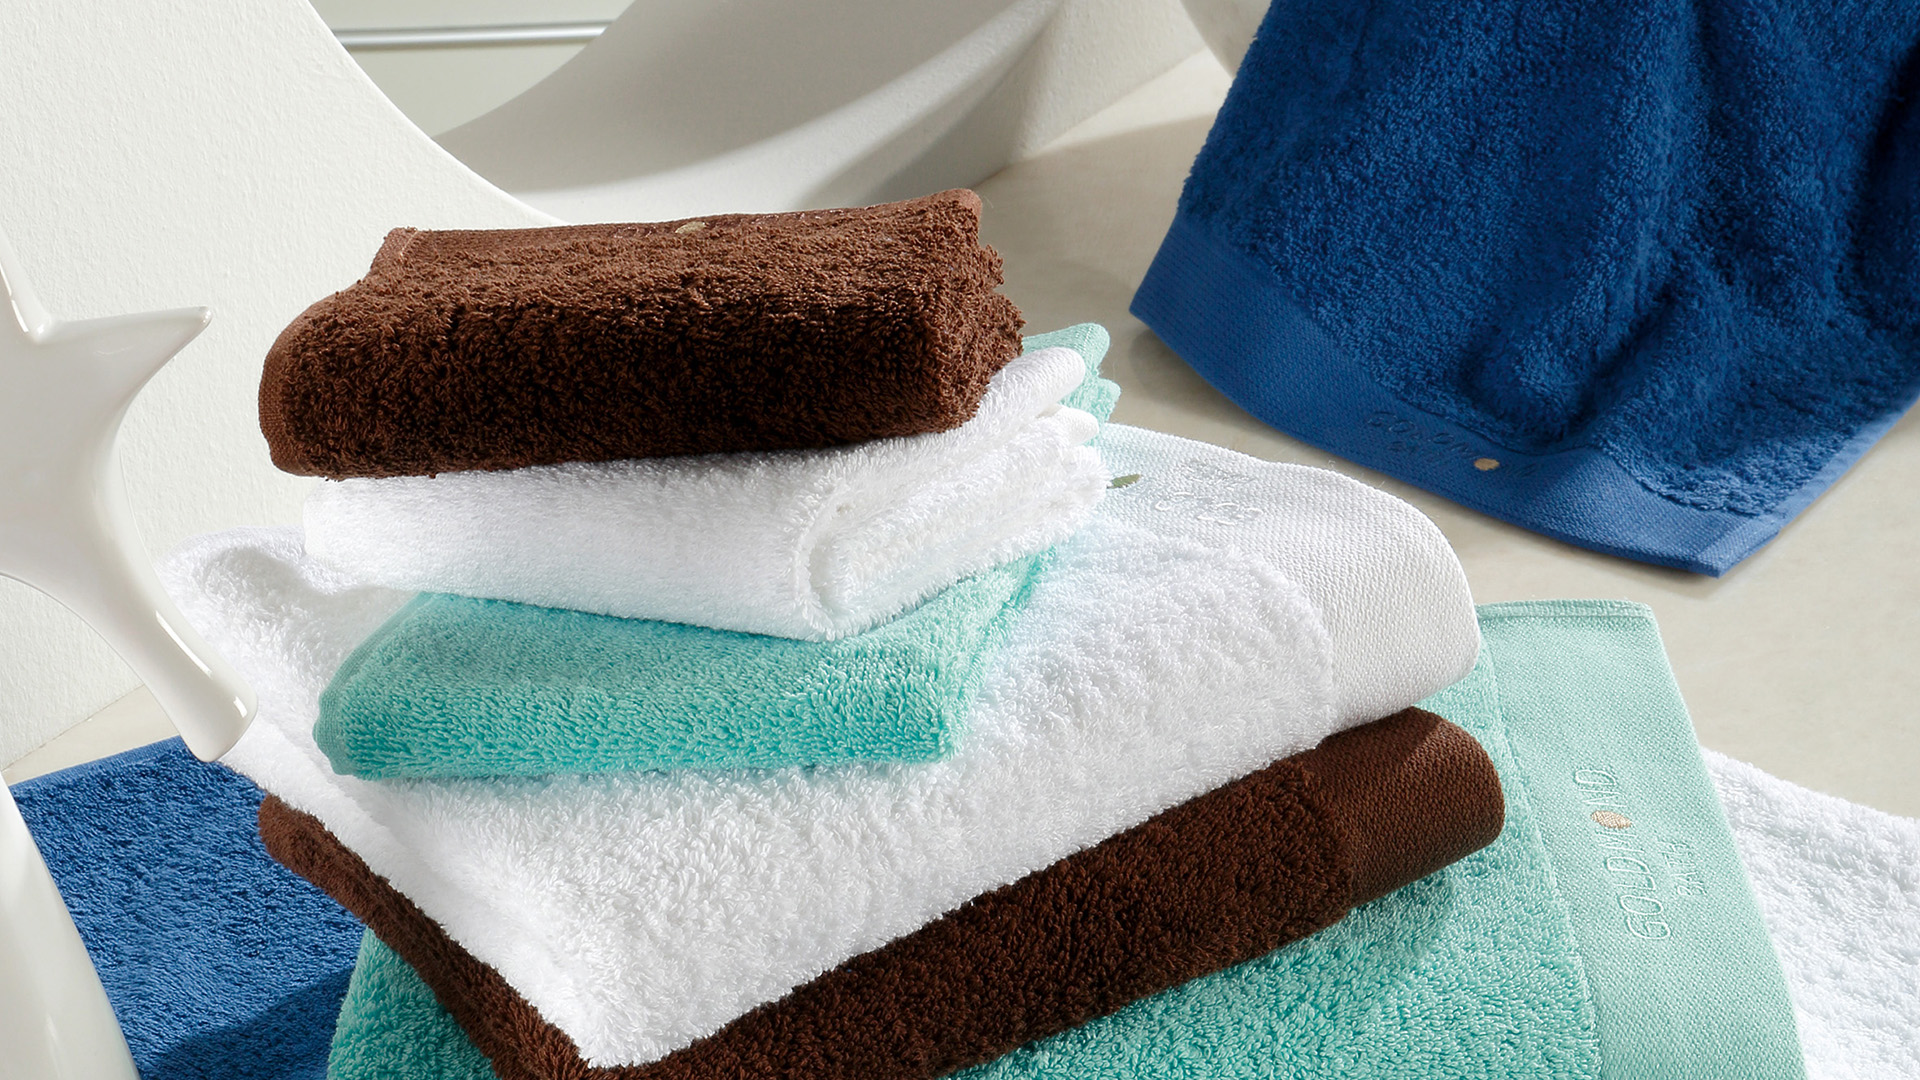 Handtuch, Duschtuch, und Bettwaren | Badzubehör, Handtücher, KBT.de Heimtextilien